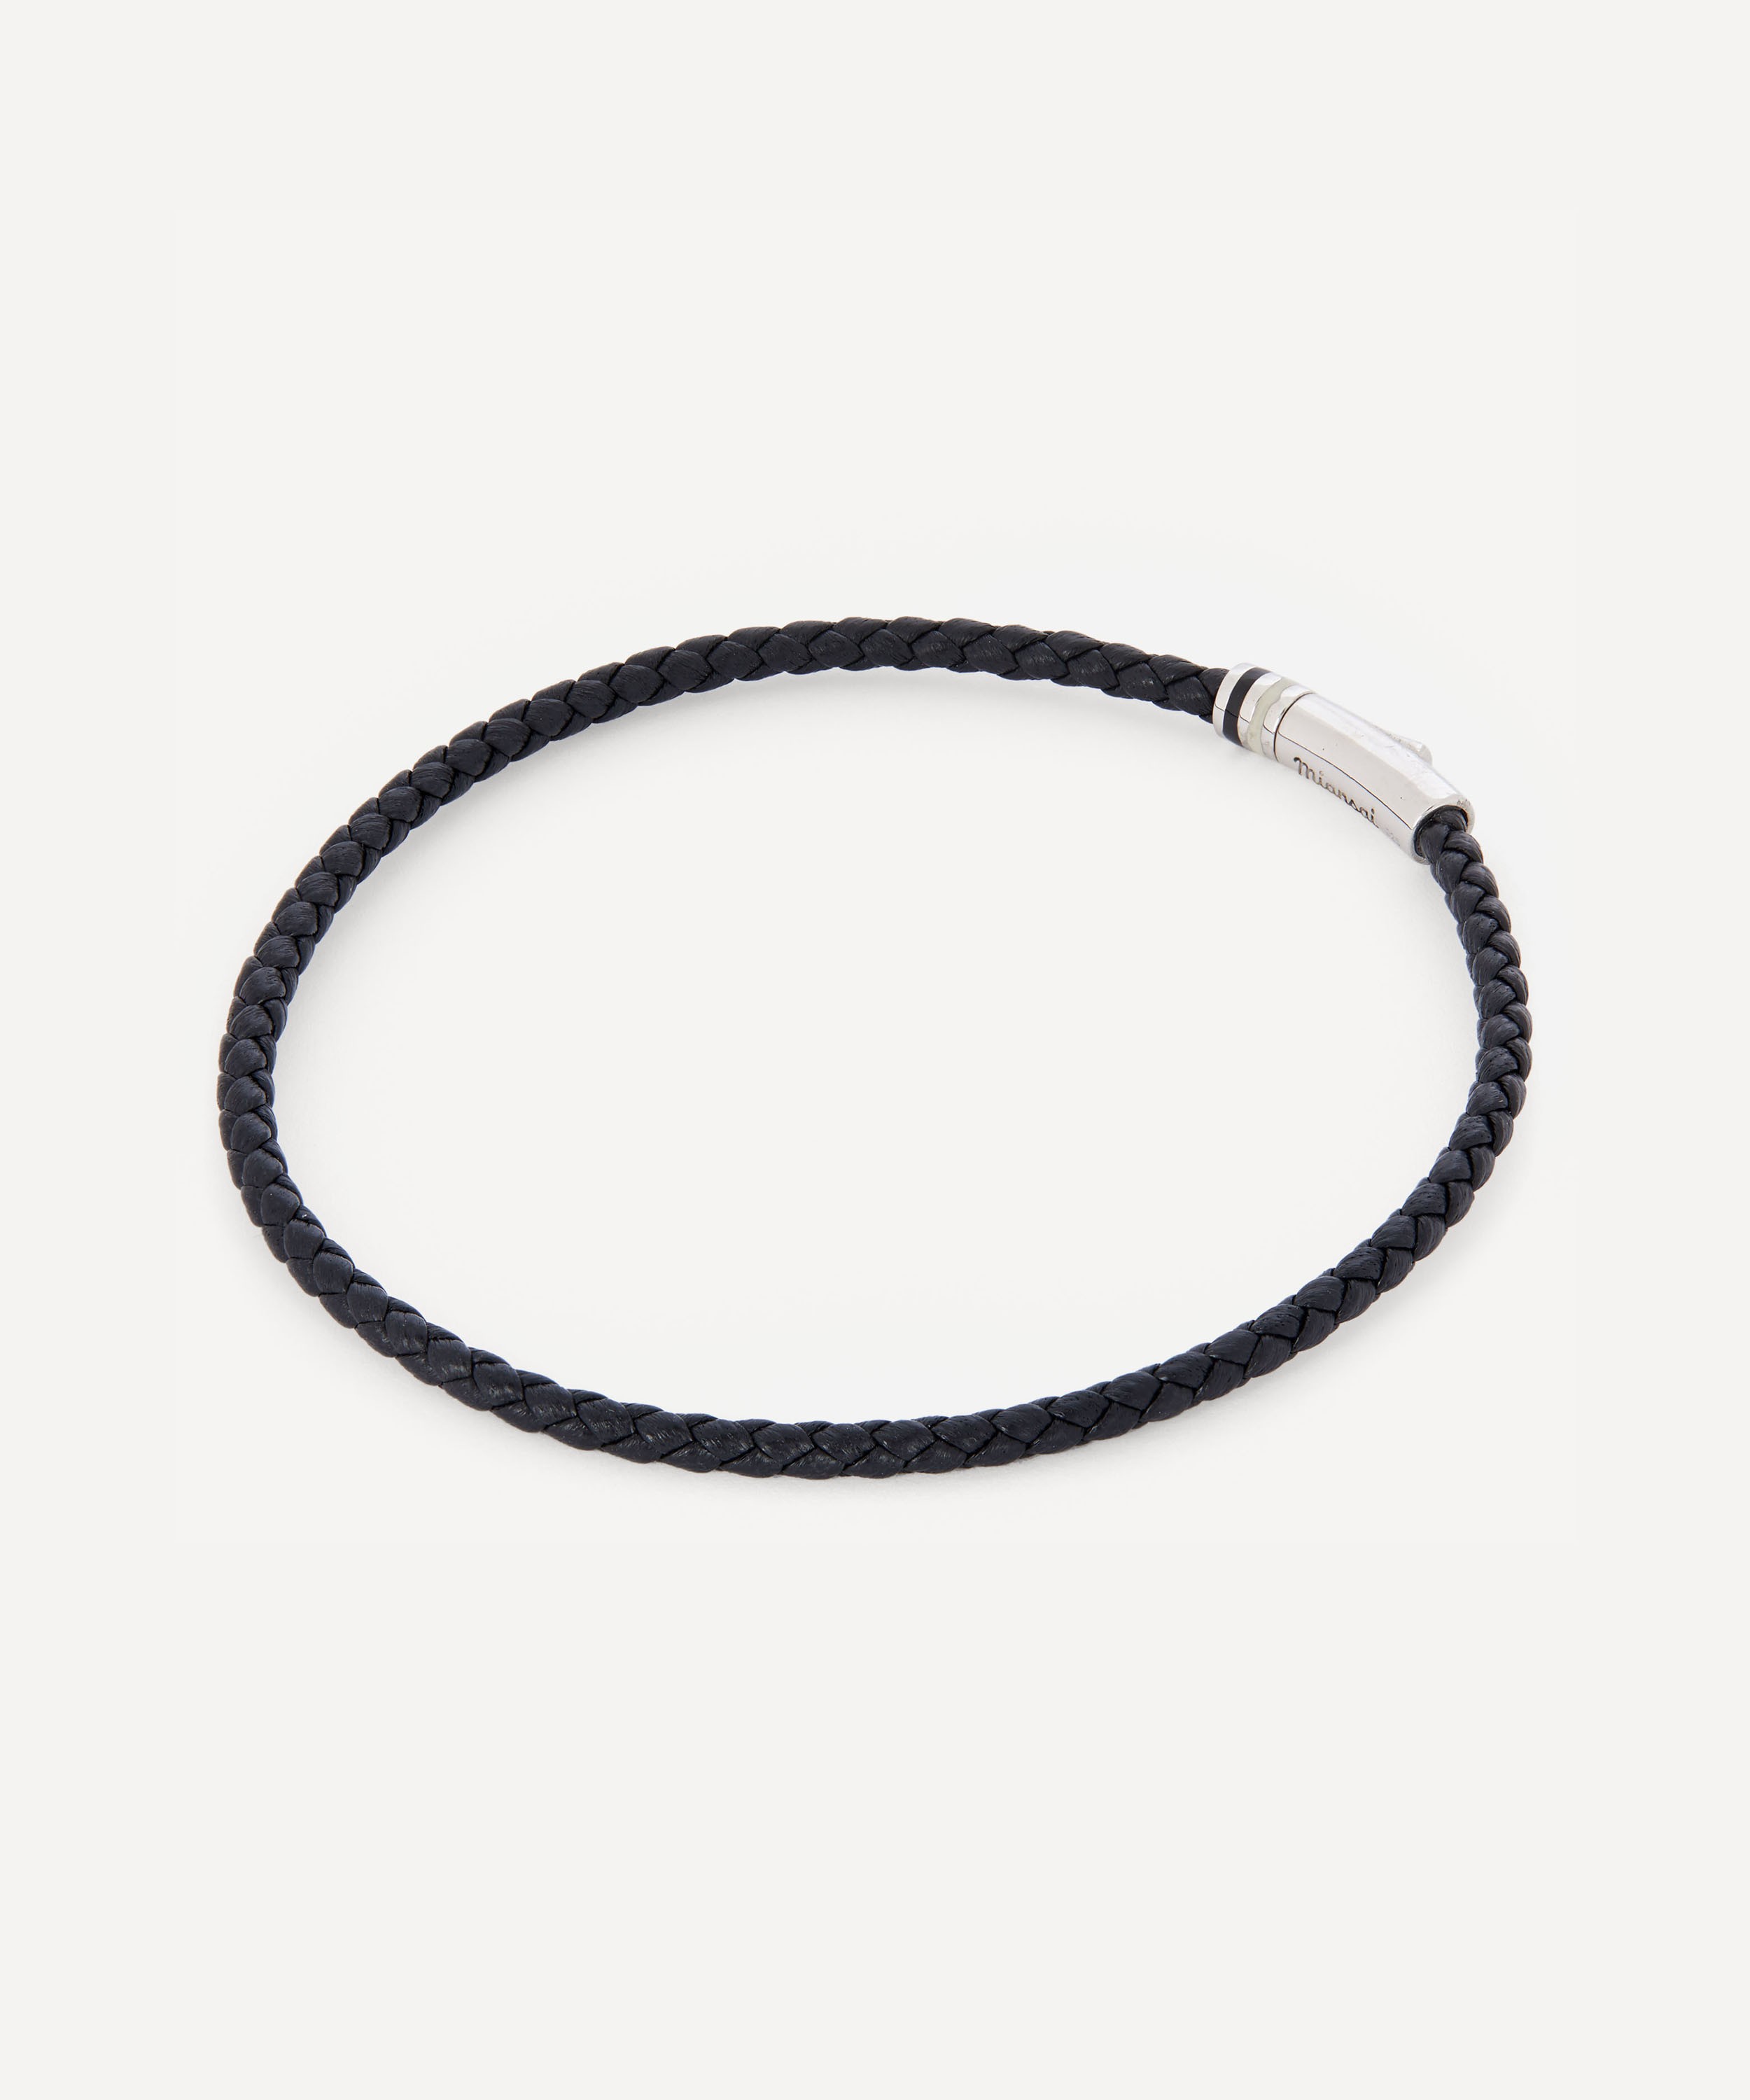 Miansai Men's Juno Rope Bracelet